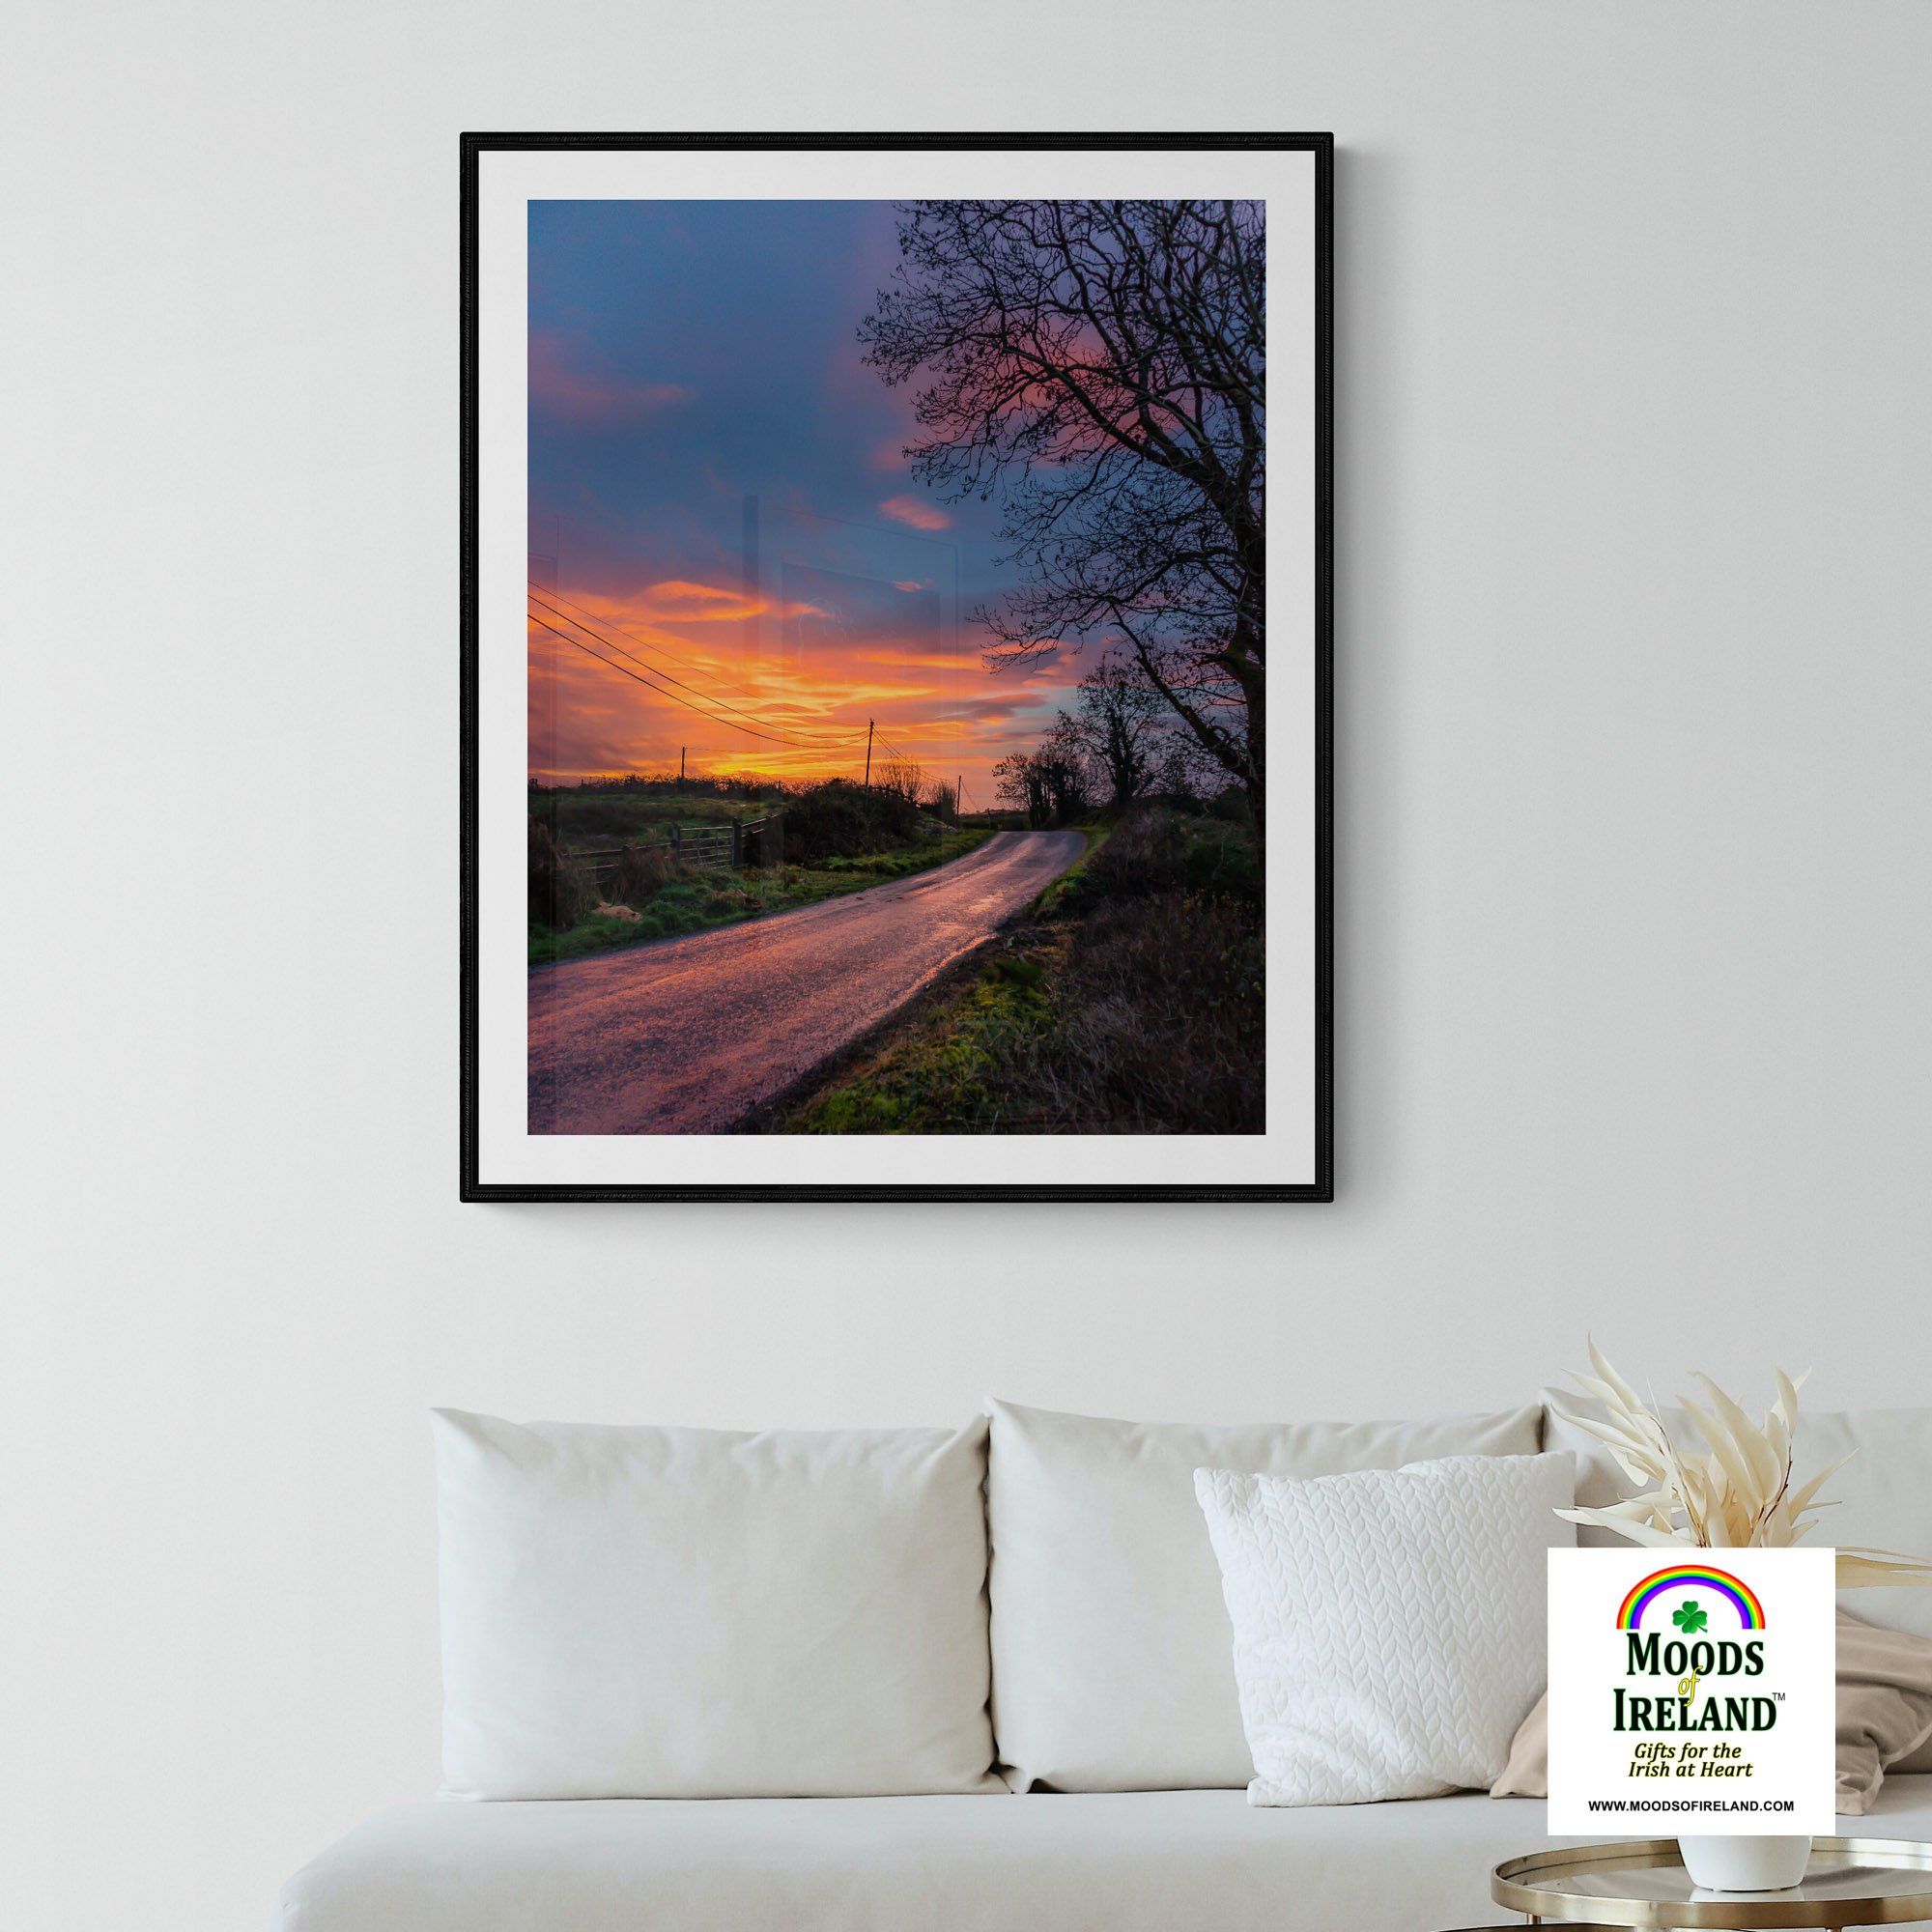 Print - Sunrise Reflection on County Clare Road - James A. Truett - Moods of Ireland - Irish Art